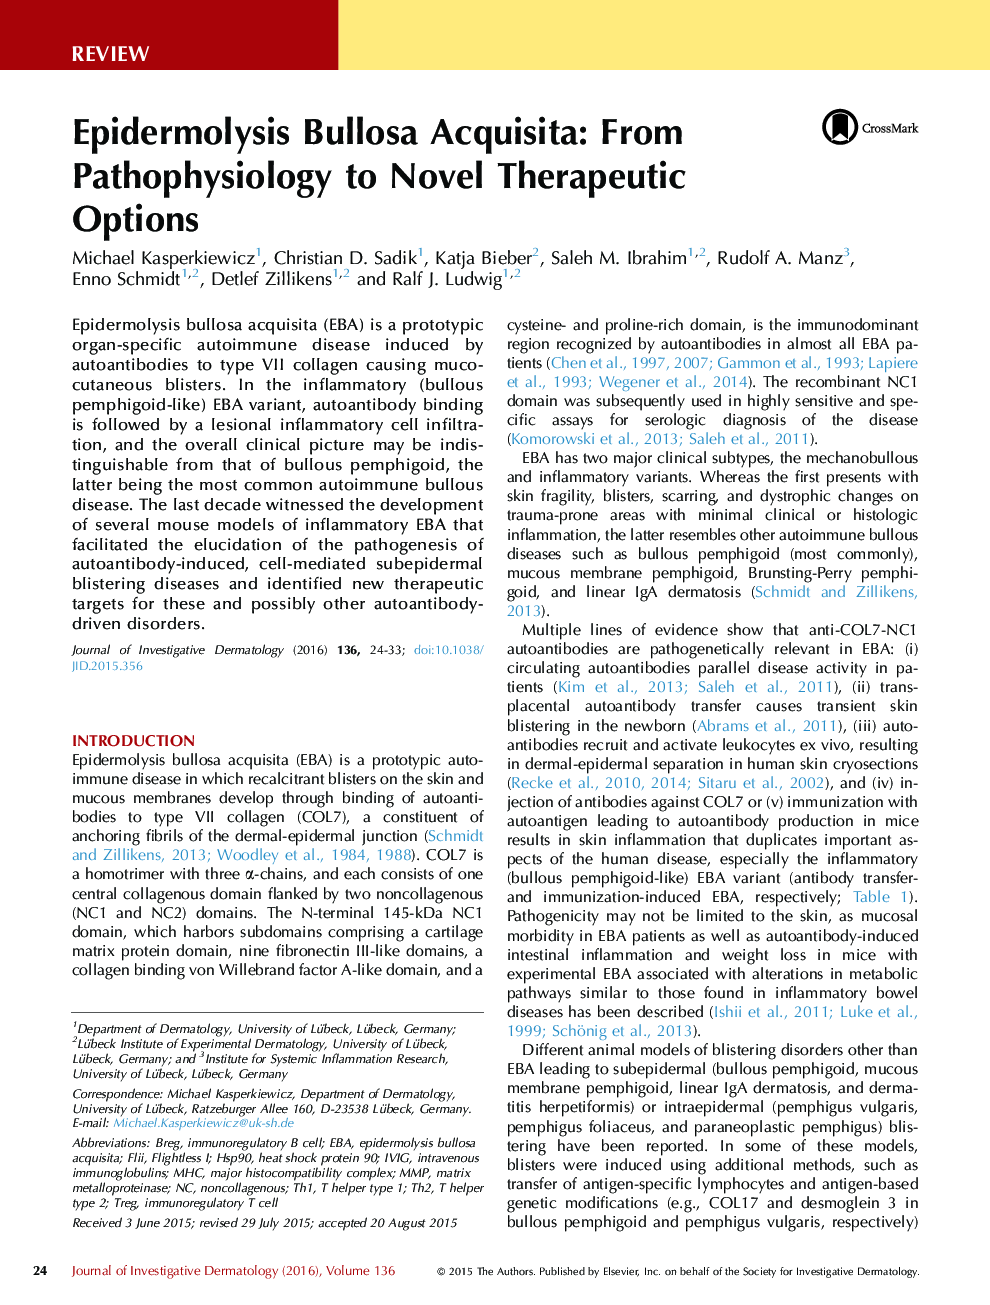 Epidermolysis Bullosa Acquisita: From Pathophysiology to Novel Therapeutic Options